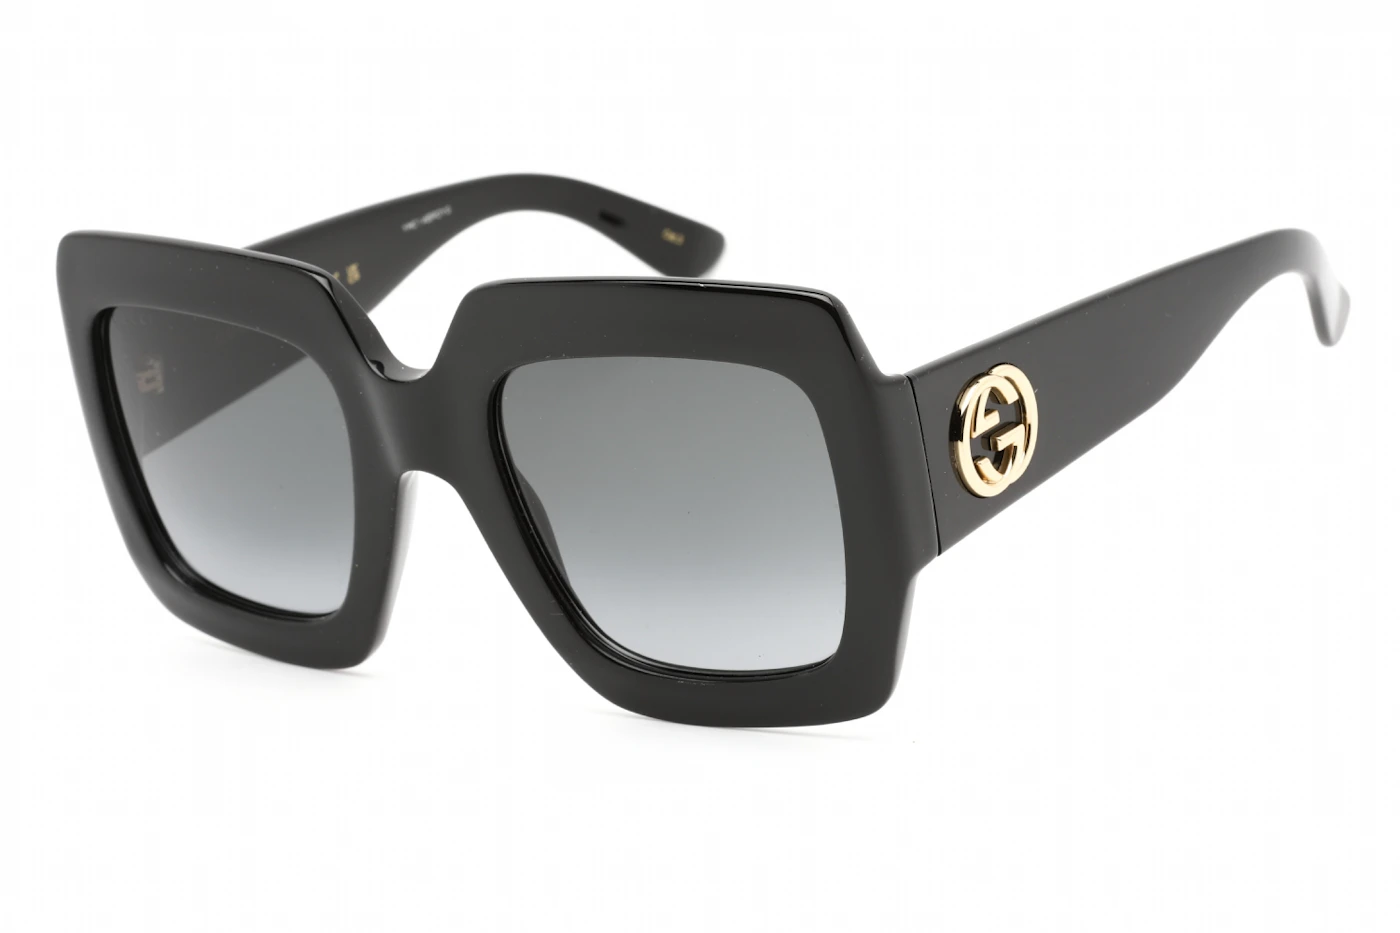 Gucci Oversized Square Sunglasses Black/Grey (GG0053SN-001) in Acetate - US